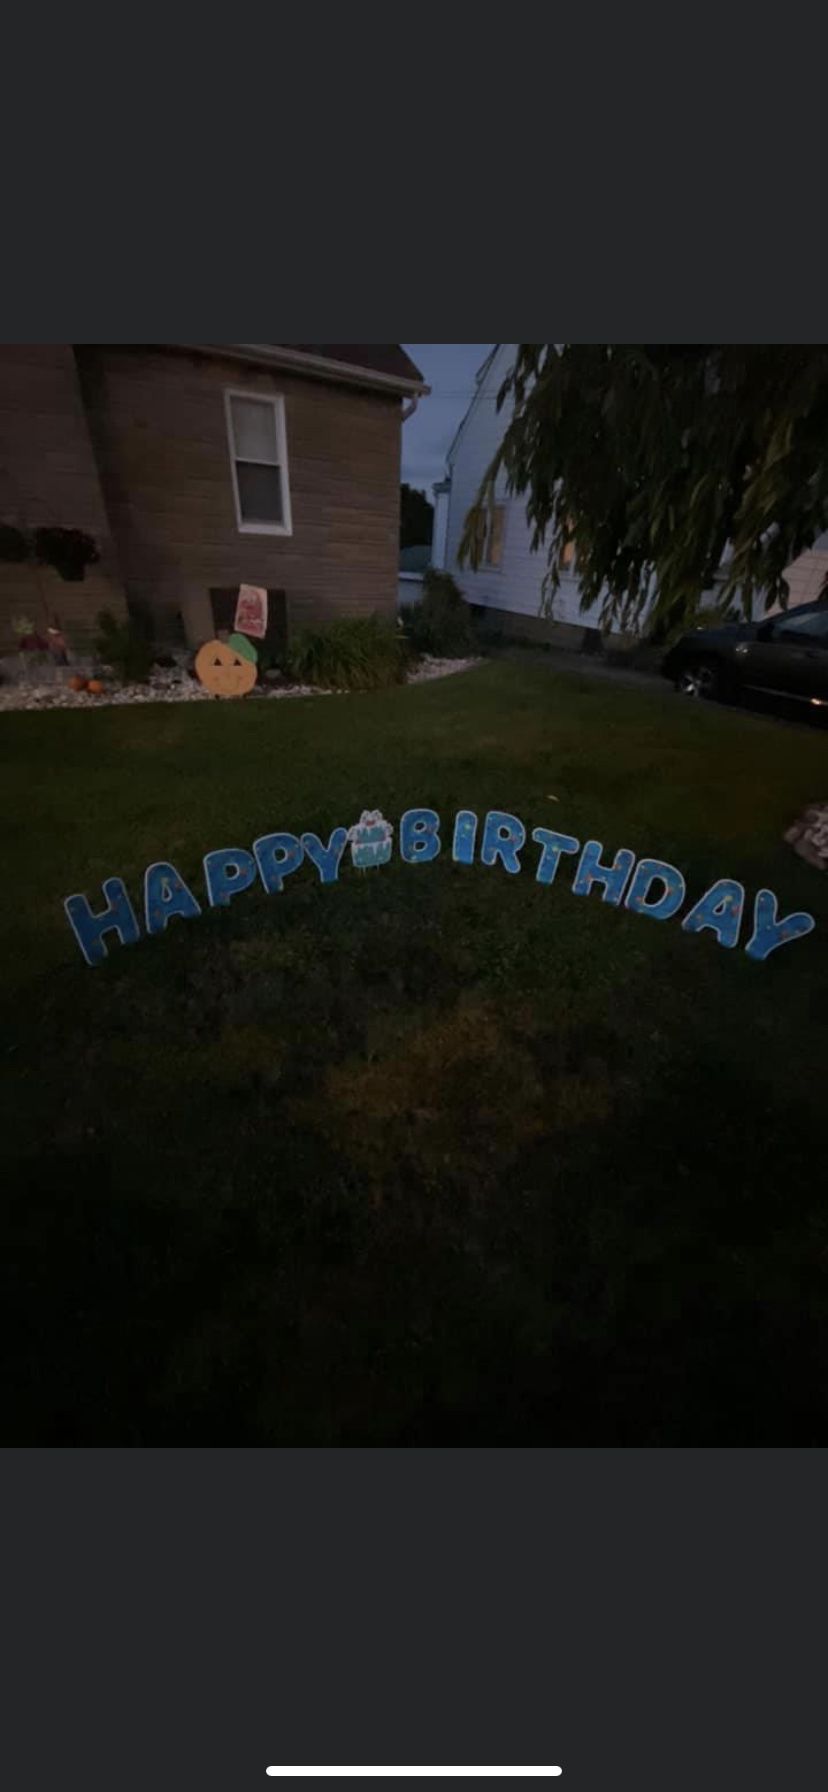 Happy Birthday Yard sign 